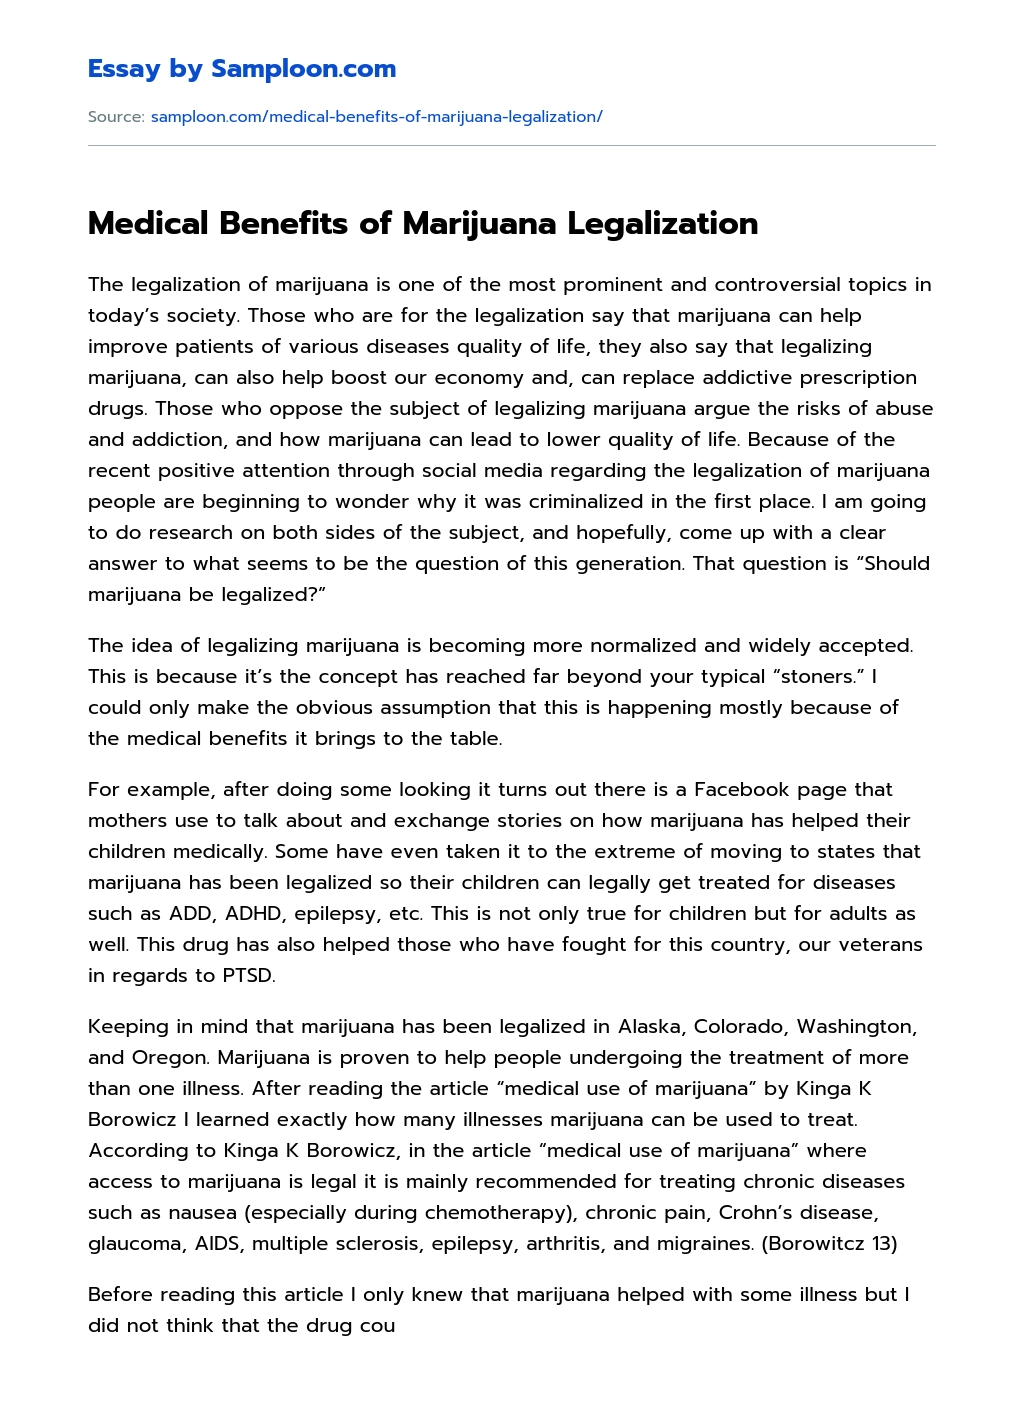 Medical Benefits of Marijuana Legalization essay